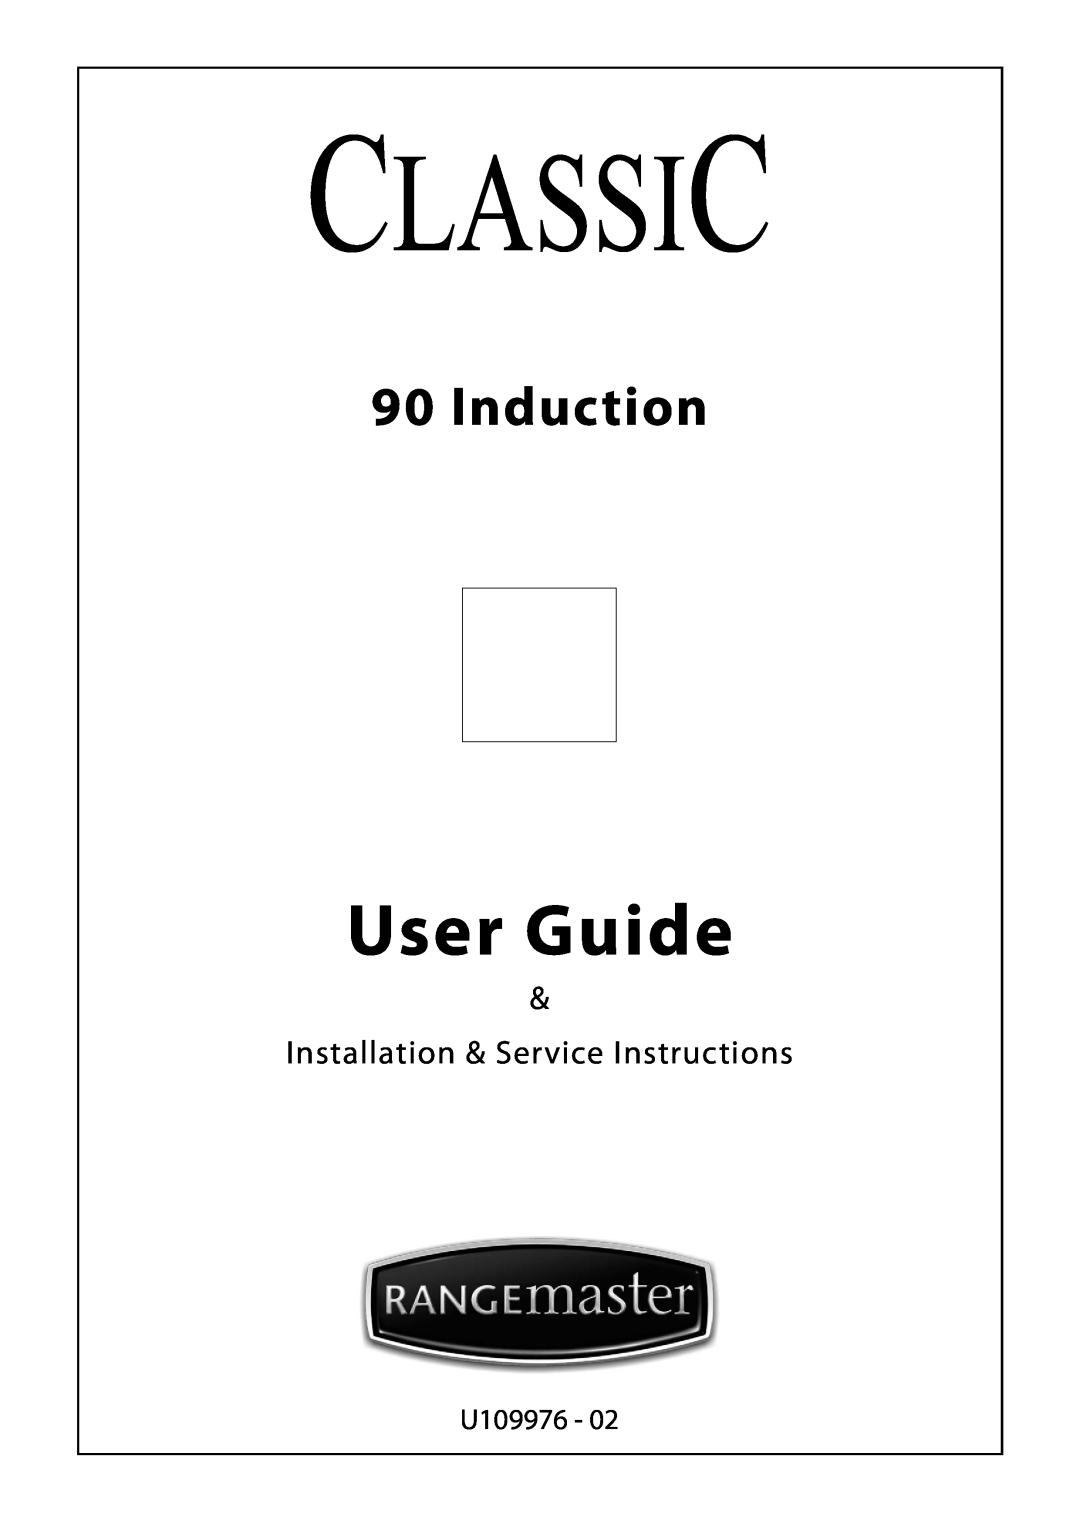 Rangemaster U109976 - 02 manual User Guide, Induction, Installation & Service Instructions 